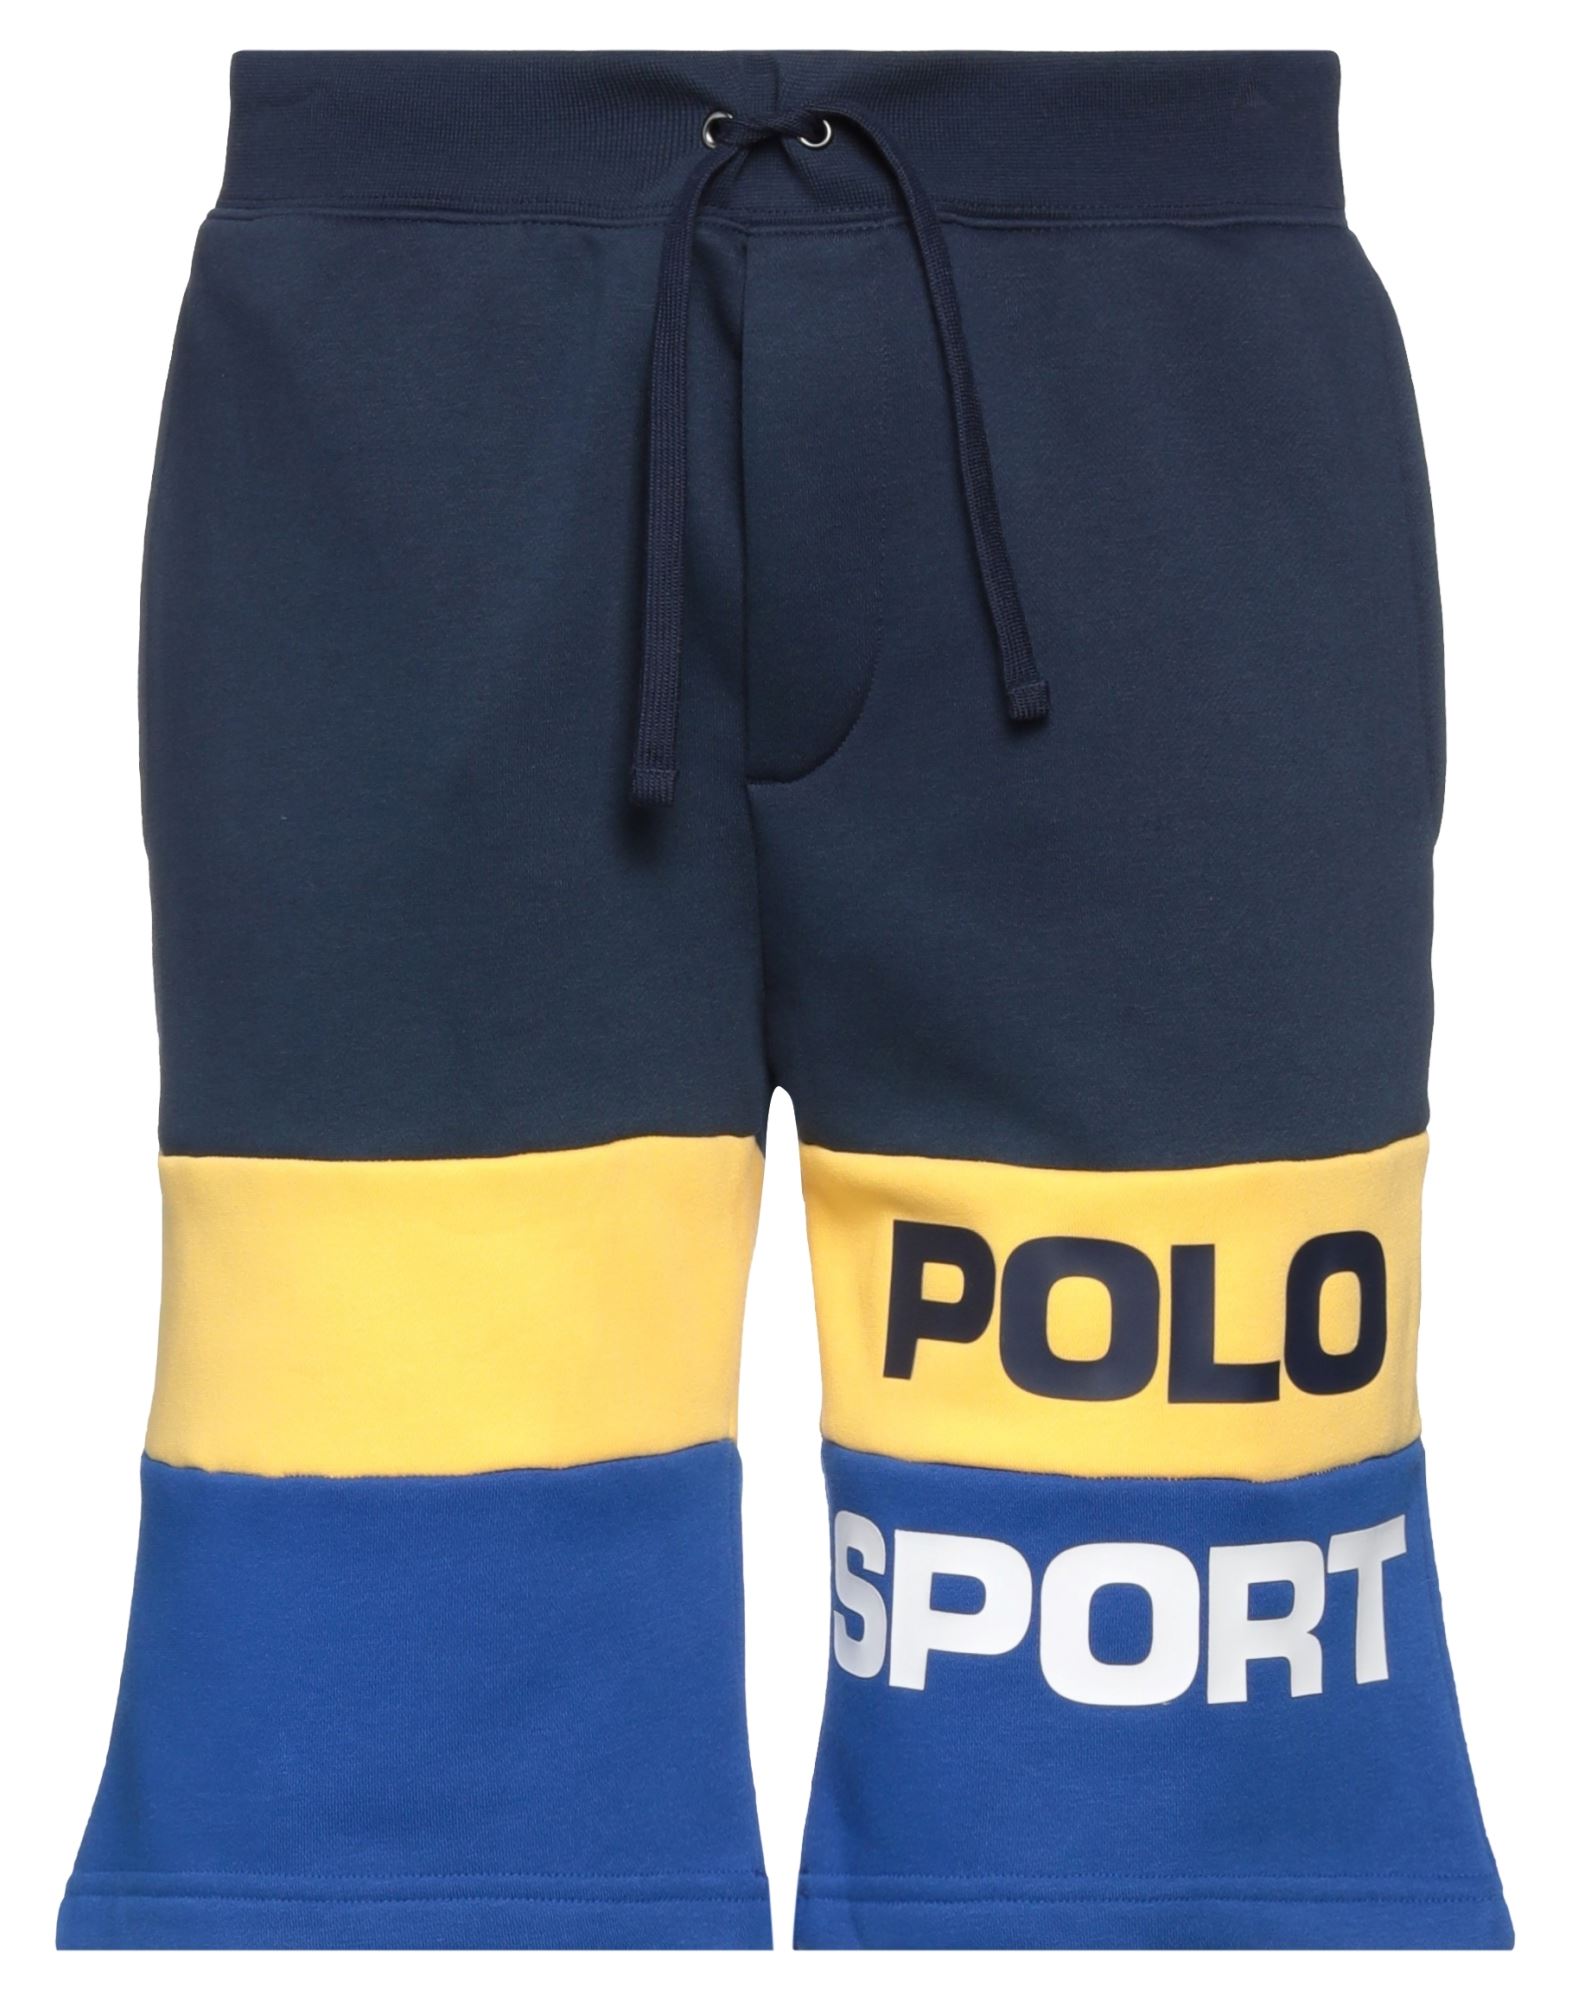 POLO SPORT RALPH LAUREN Shorts & Bermudashorts Herren Nachtblau von POLO SPORT RALPH LAUREN